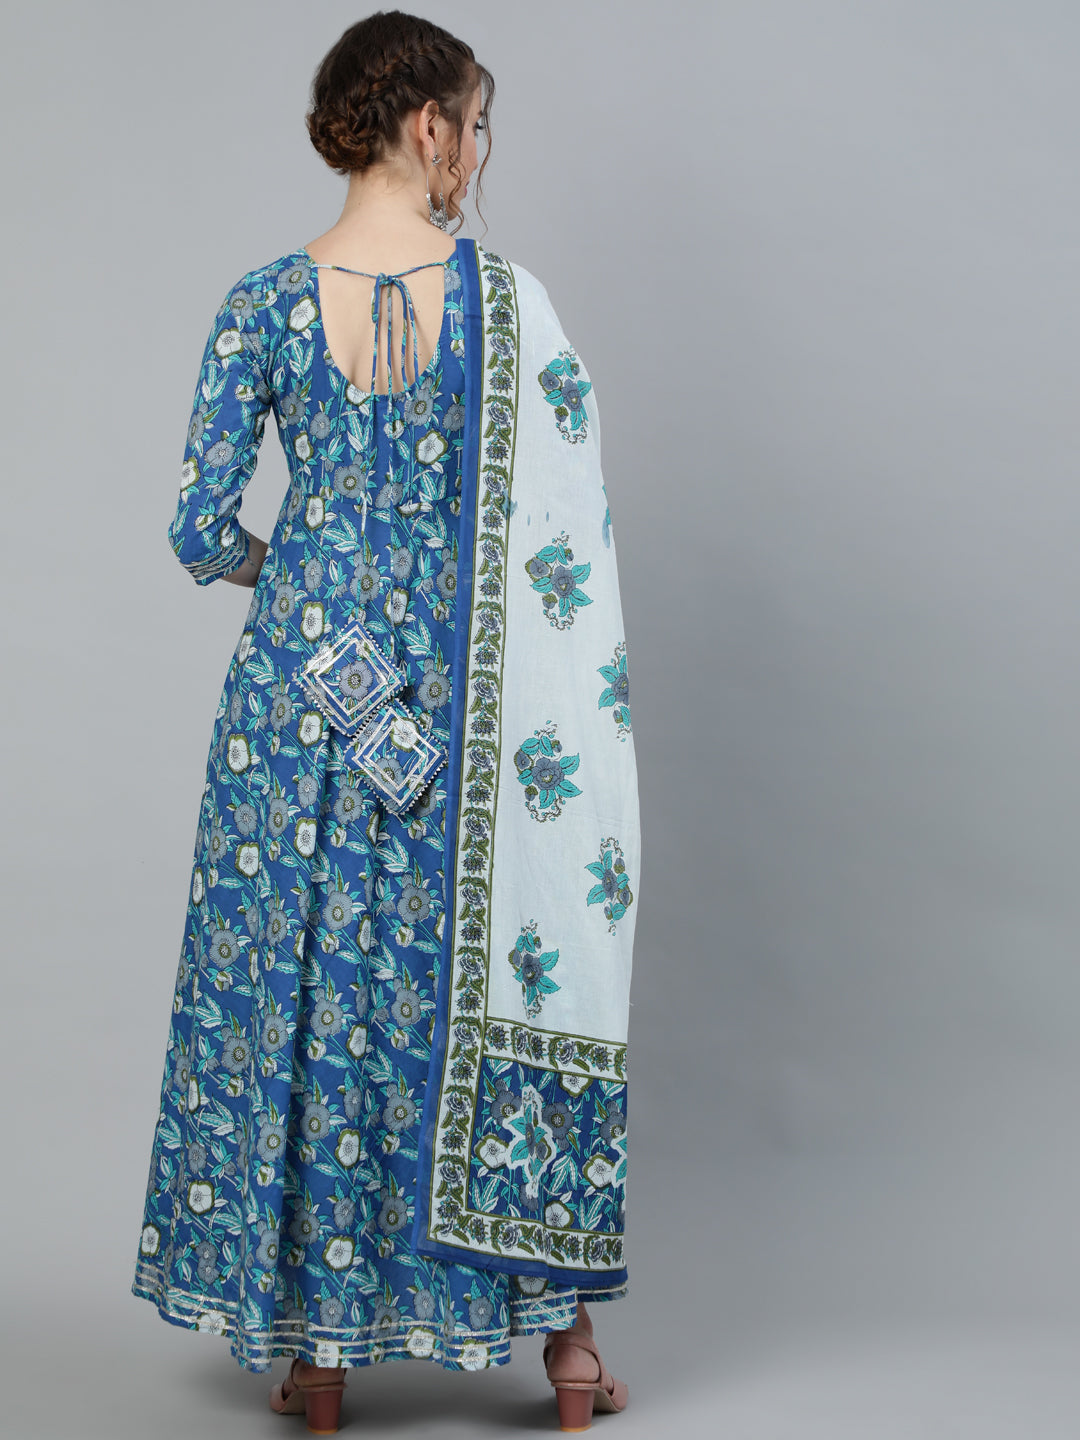 Blue Floral Print Maxi Dress With Dupatta